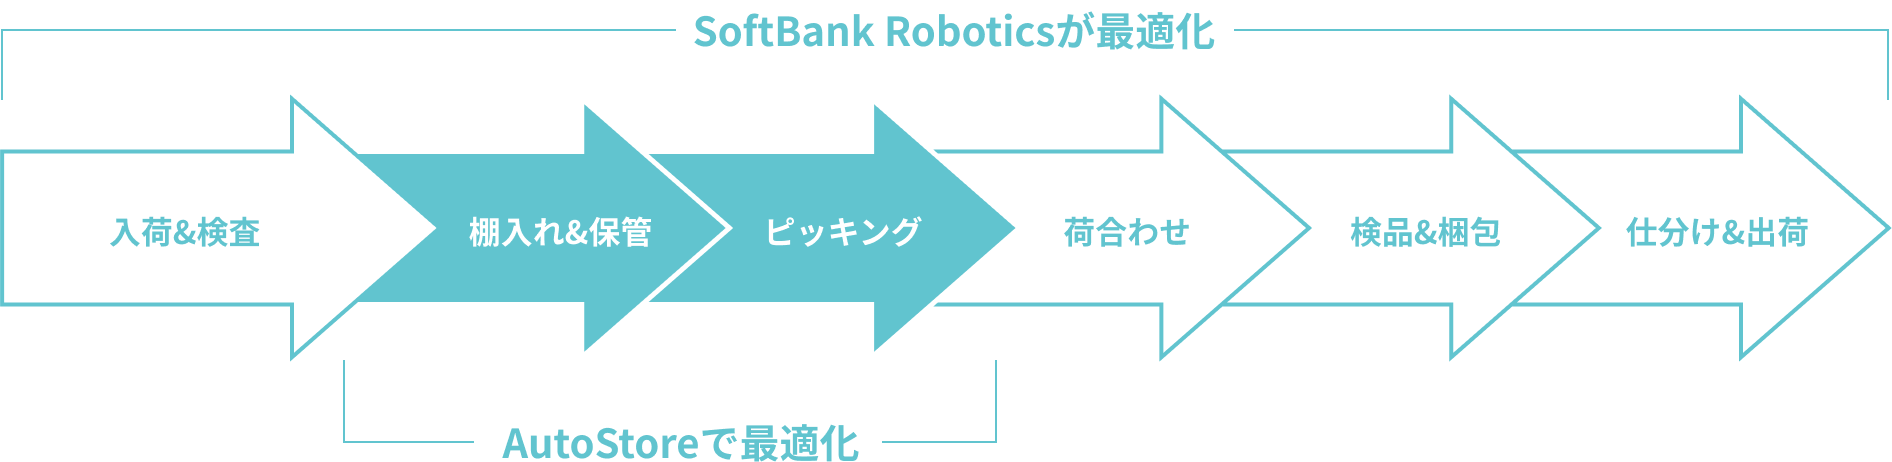 SoftBank Roboticsが最適化：入荷検品 → 棚入れ保管 → ピッキング → 荷合わせ → 検品 → 仕分け入荷 棚入れ保管からピッキングをAutoStoreで最適化